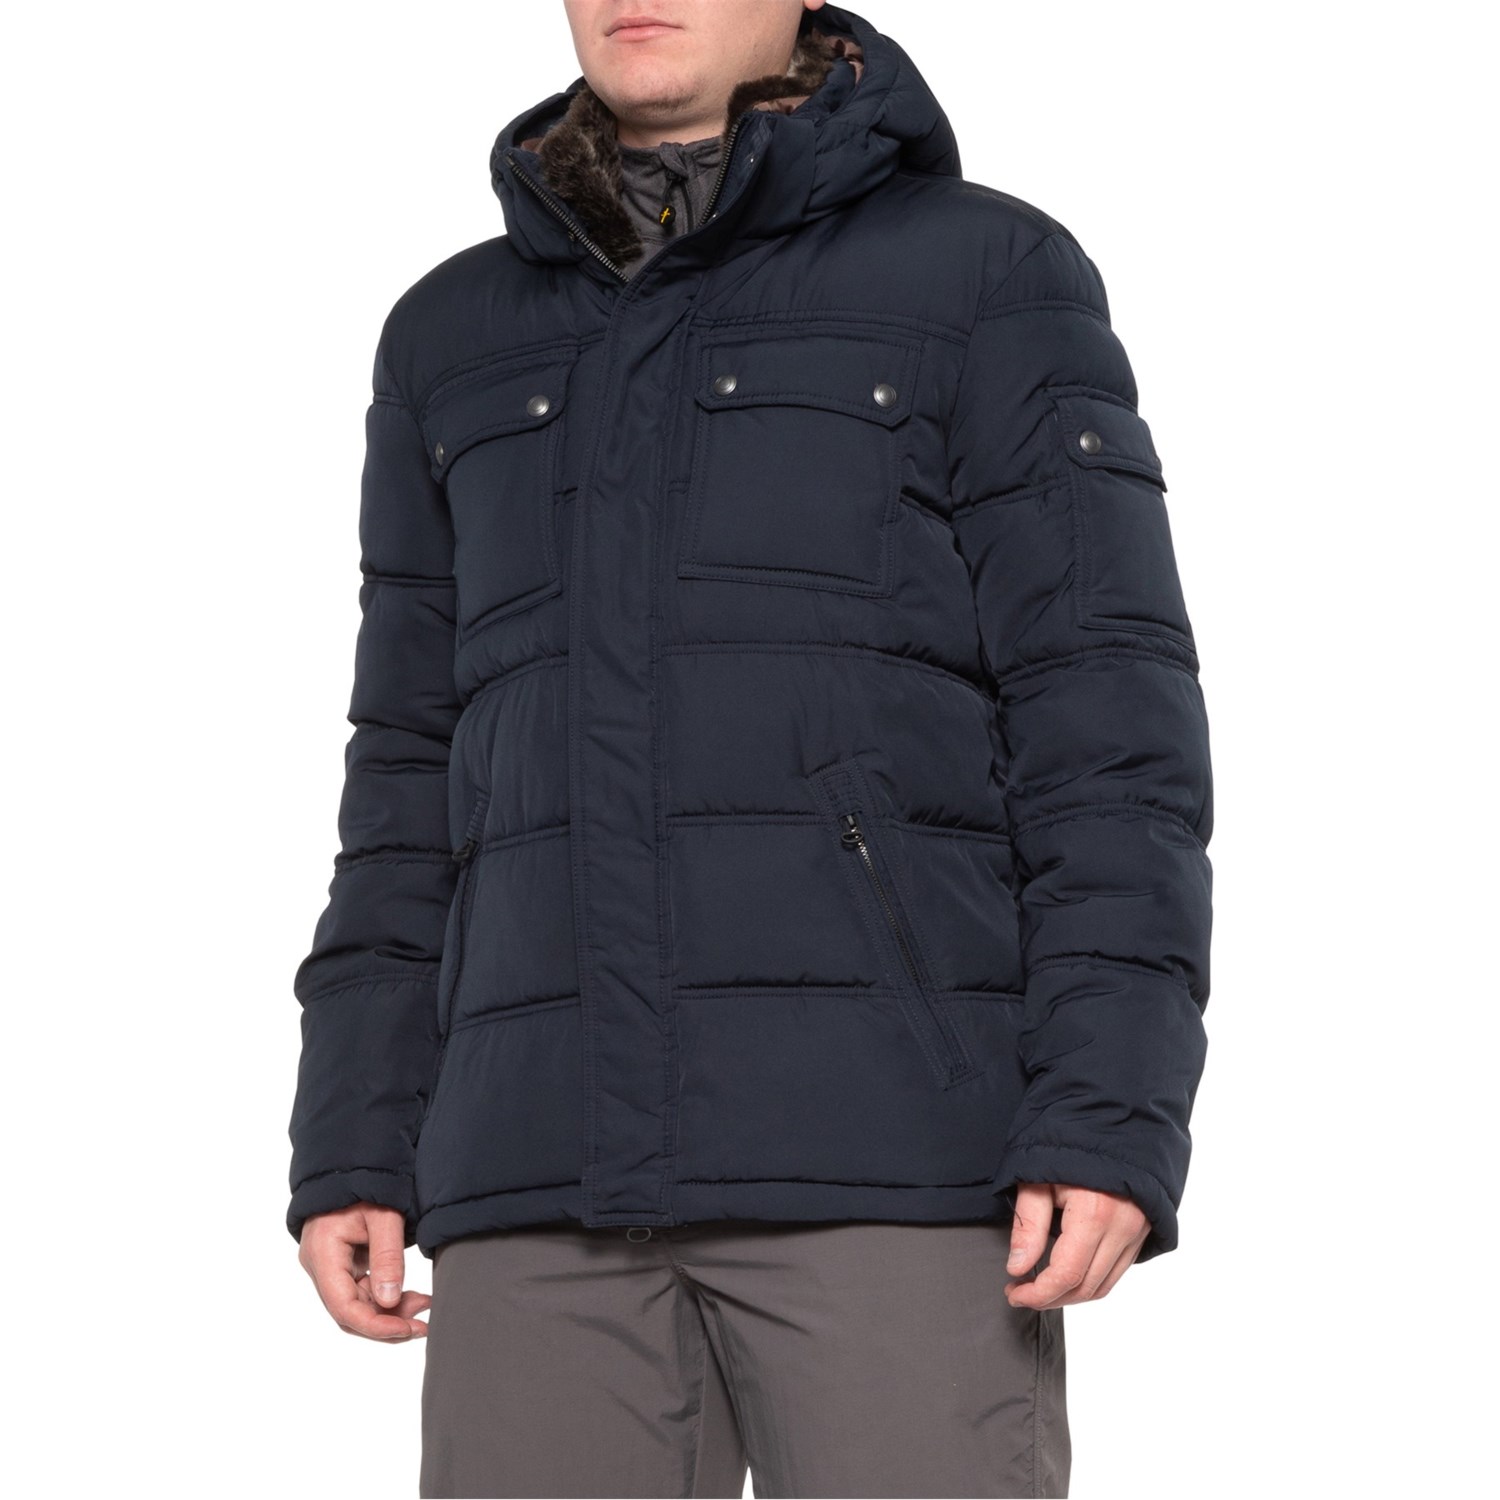 Cole Haan Water-Resistant Jacket (For Men) - Save 83%